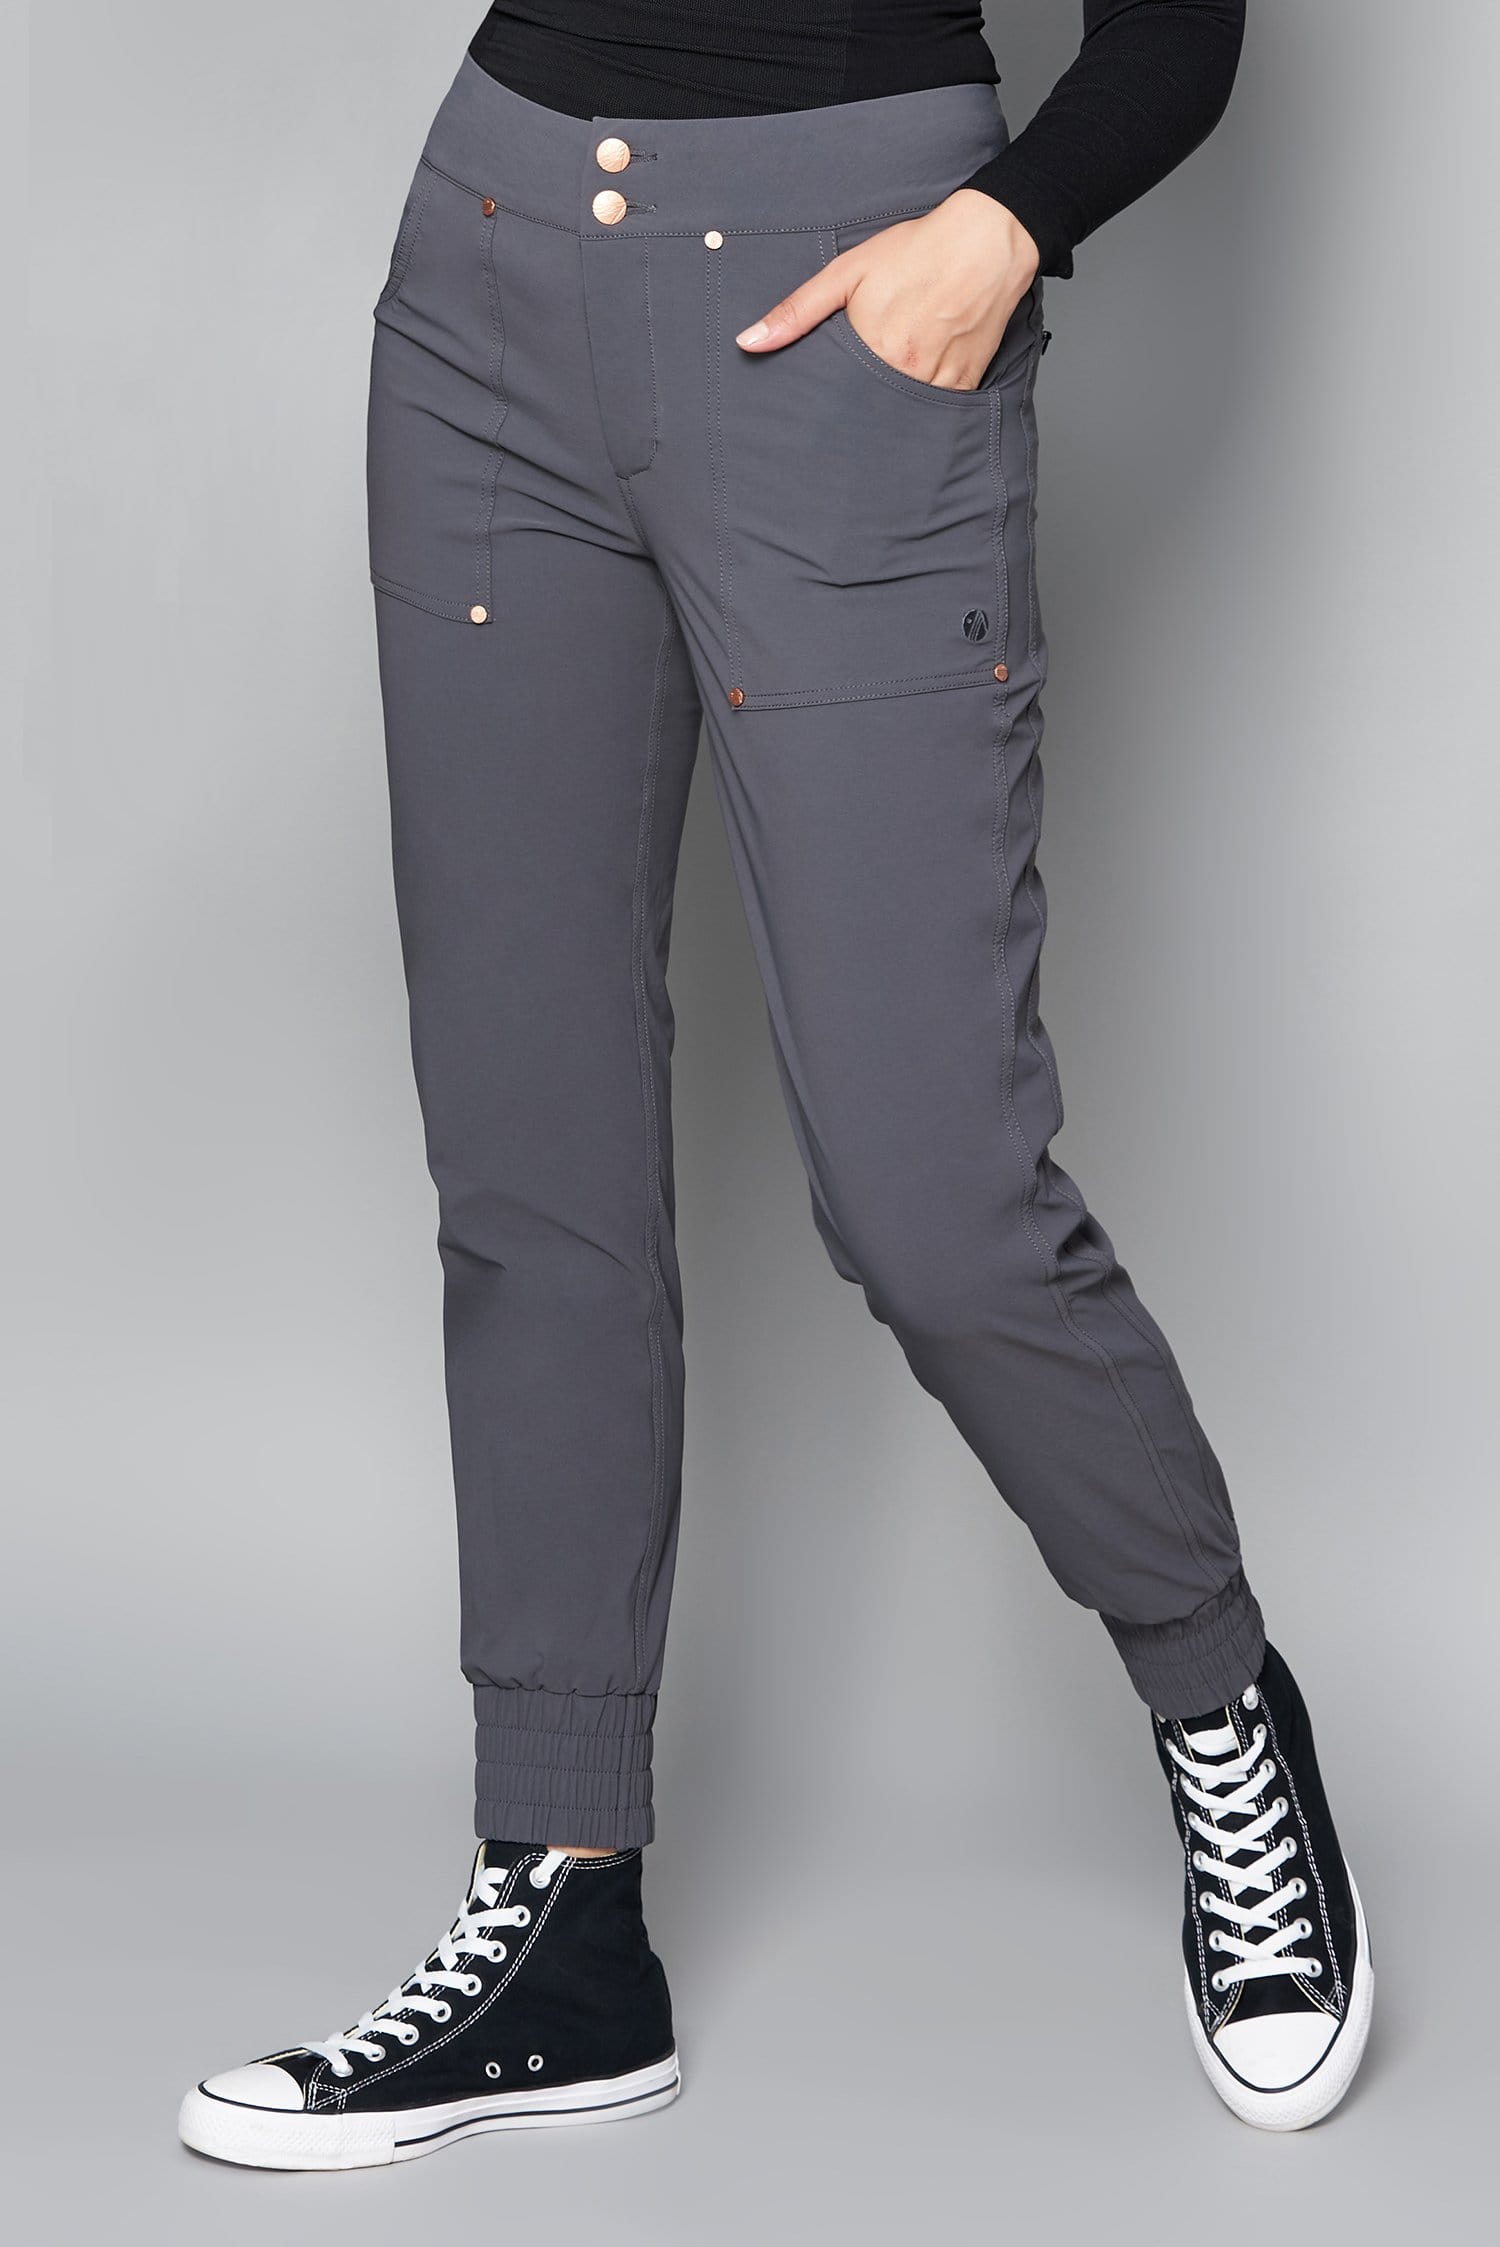 Casual Stroll Pants - Storm Grey - 30r / Uk12 - Womens - Acai Outdoorwear